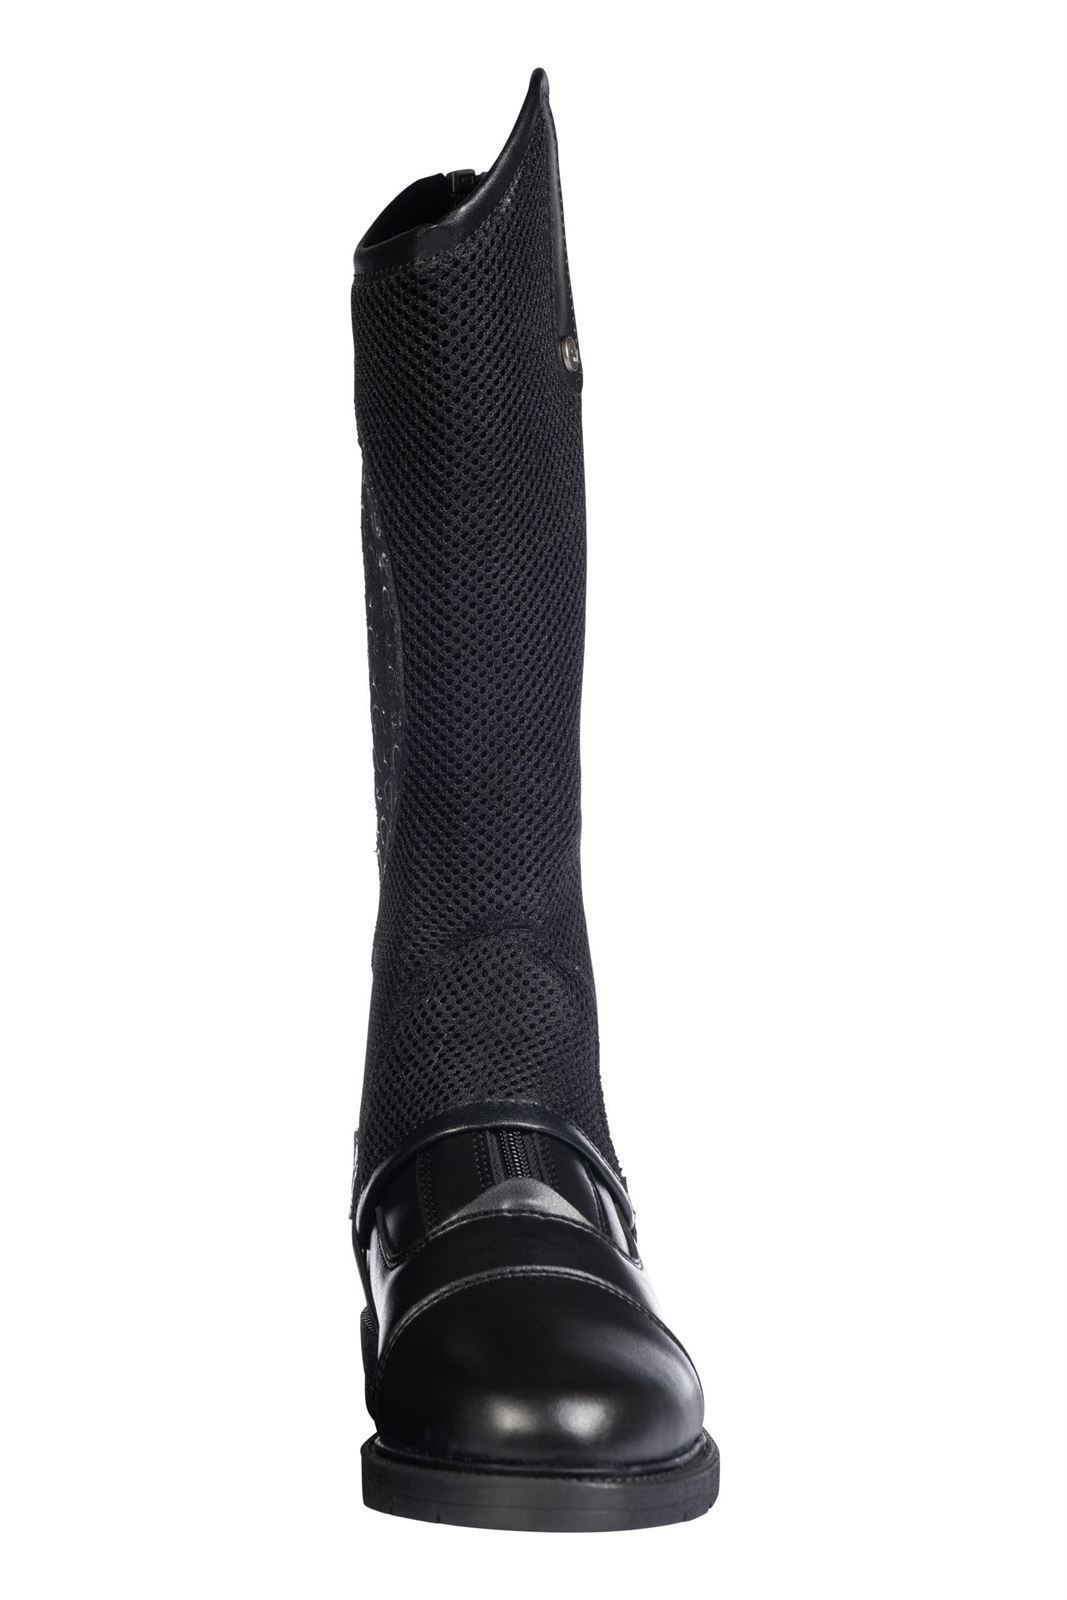 Polaina sintética HKM Sports Equipment Lara color negro (tallaje infantil) - Imagen 6